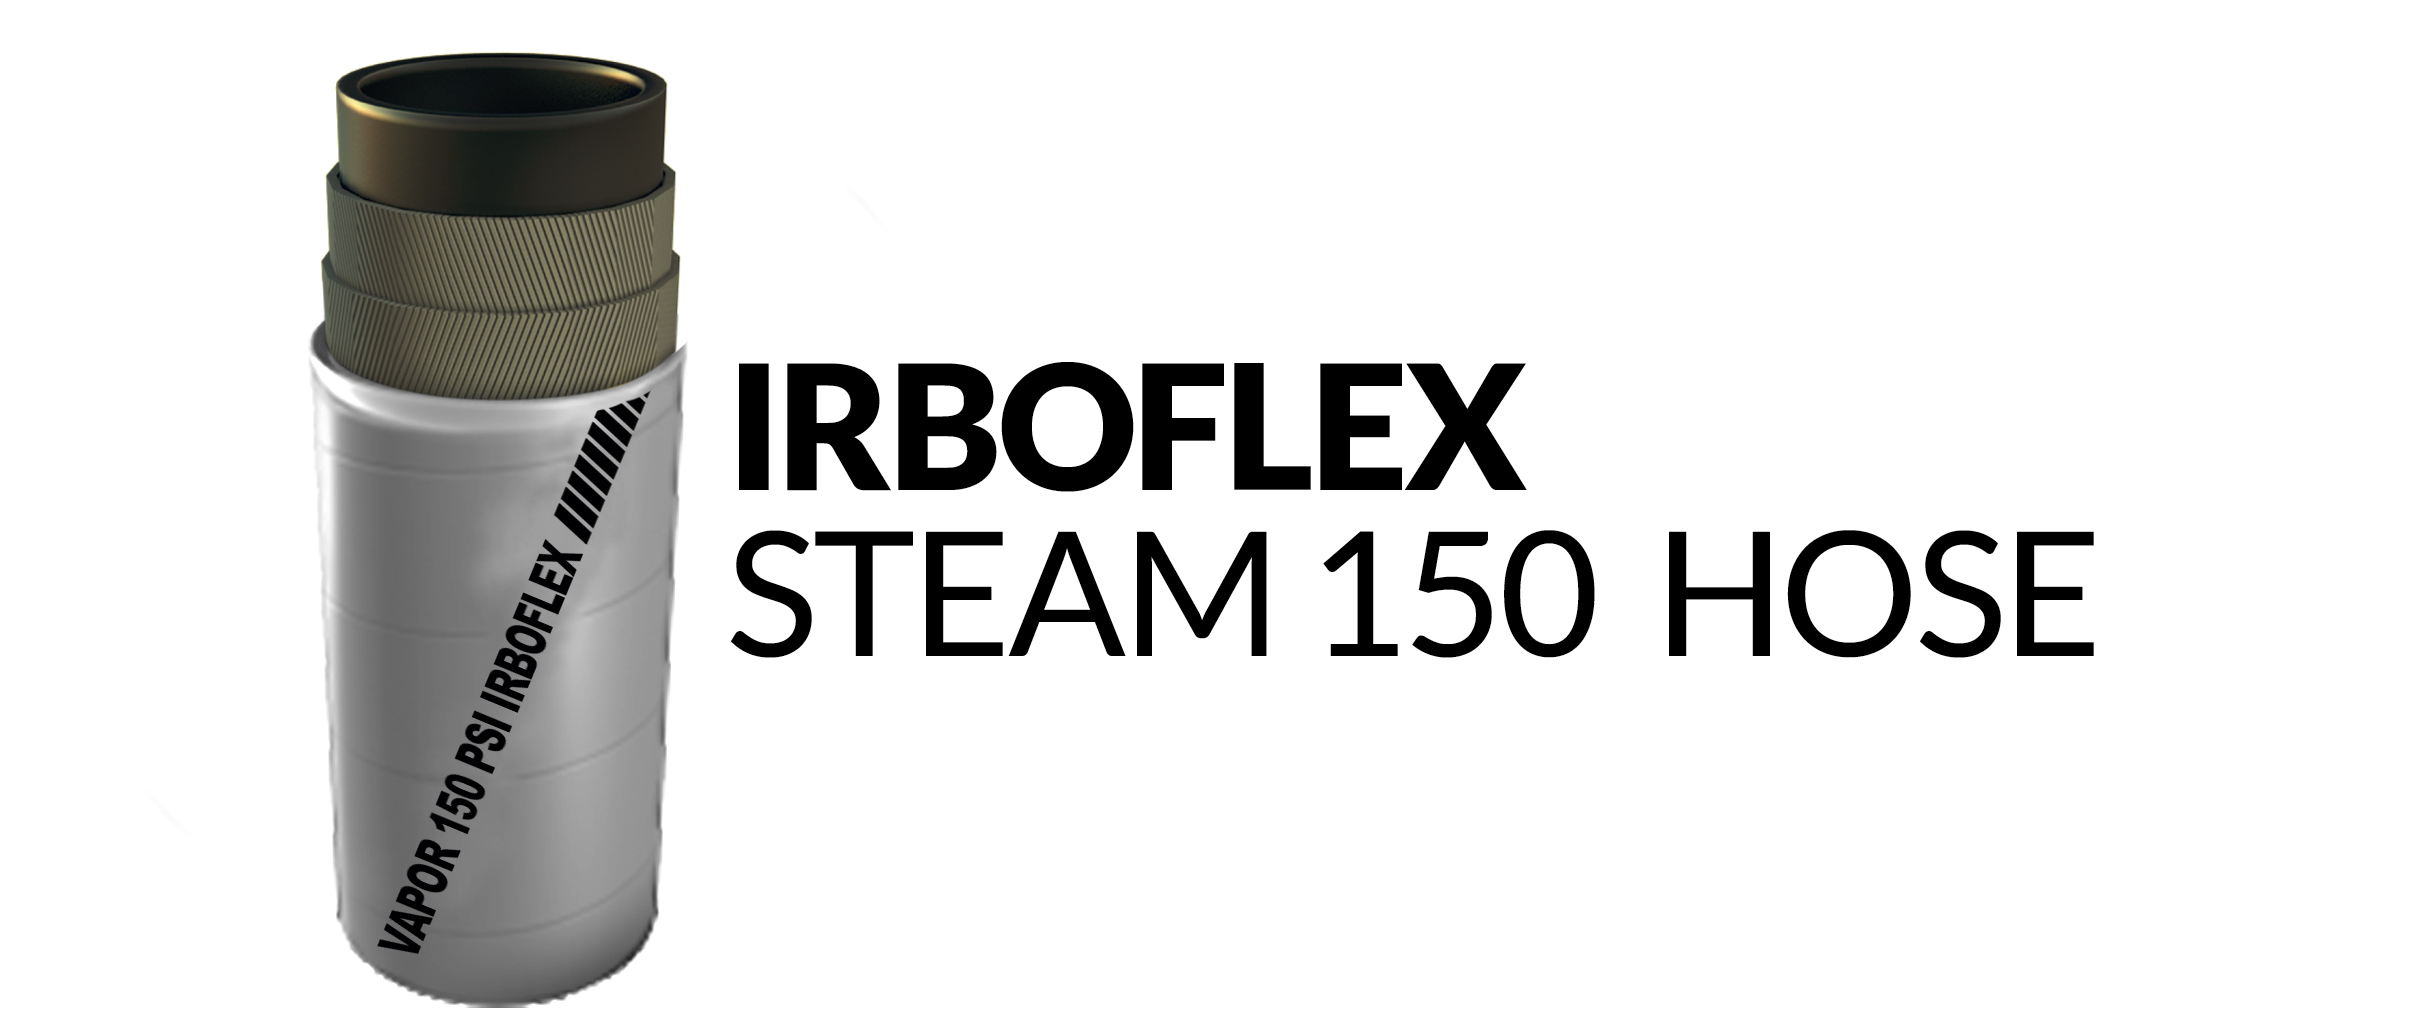 vapor-150-psi__-_irboflex-steam-150-hose-copia